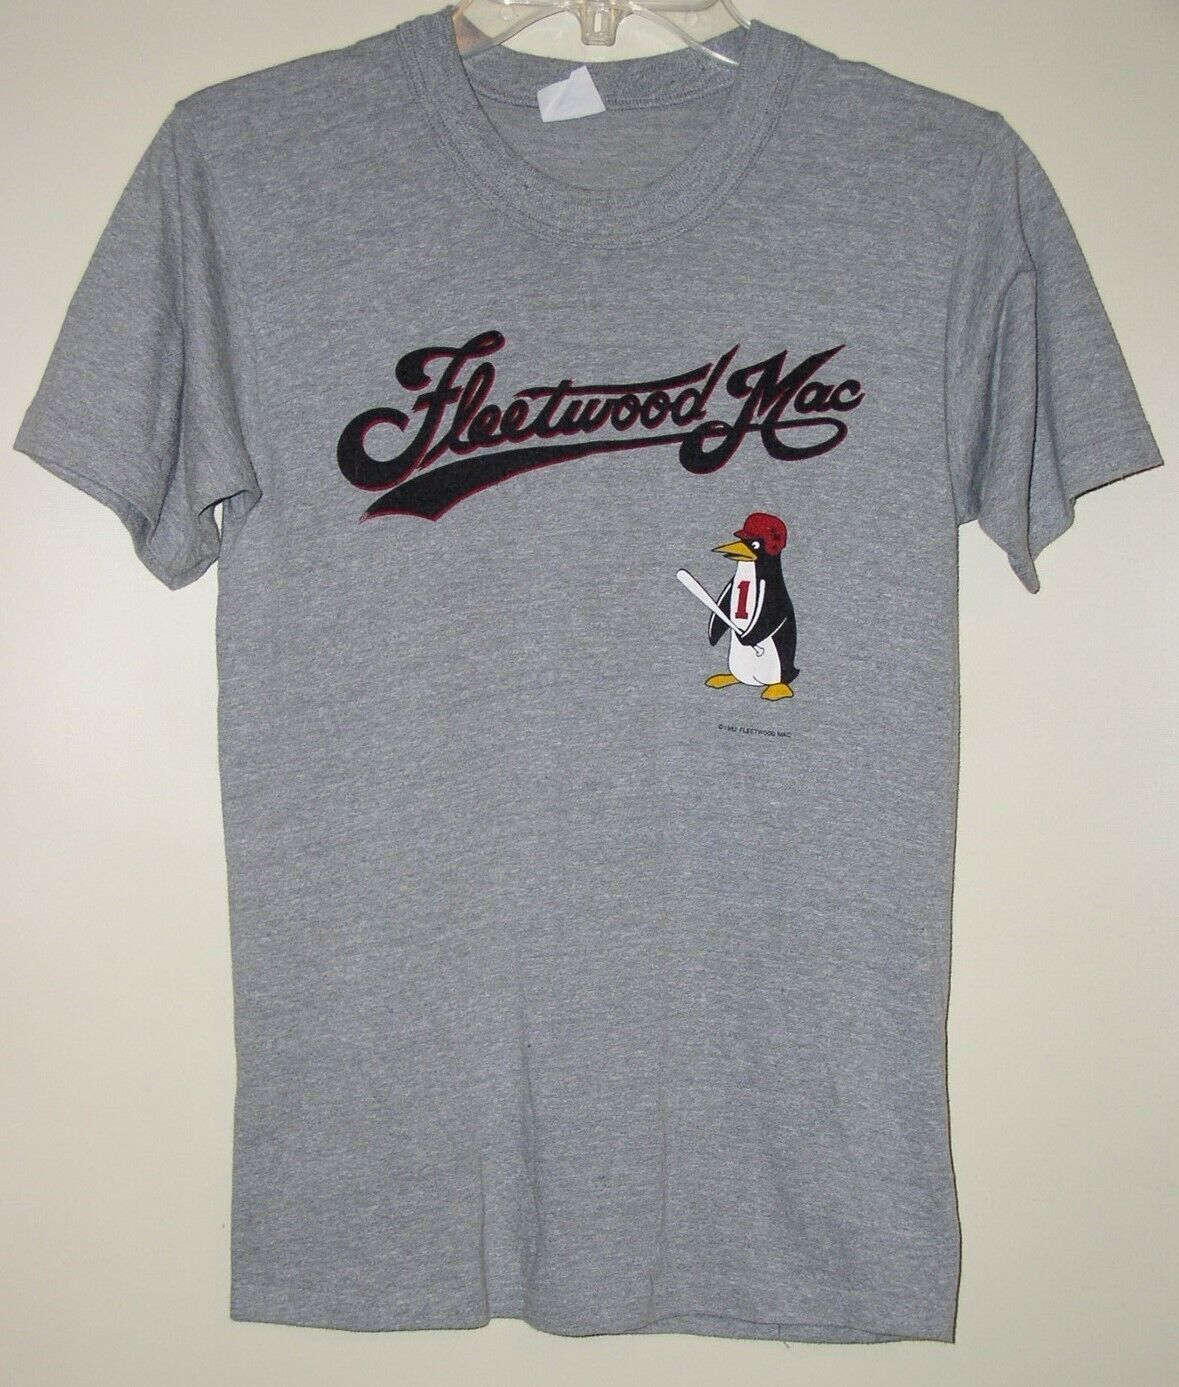 Fleetwood Mac Concert Shirt Vintage 1982 Benefit Irvine Meadows Single Stitched